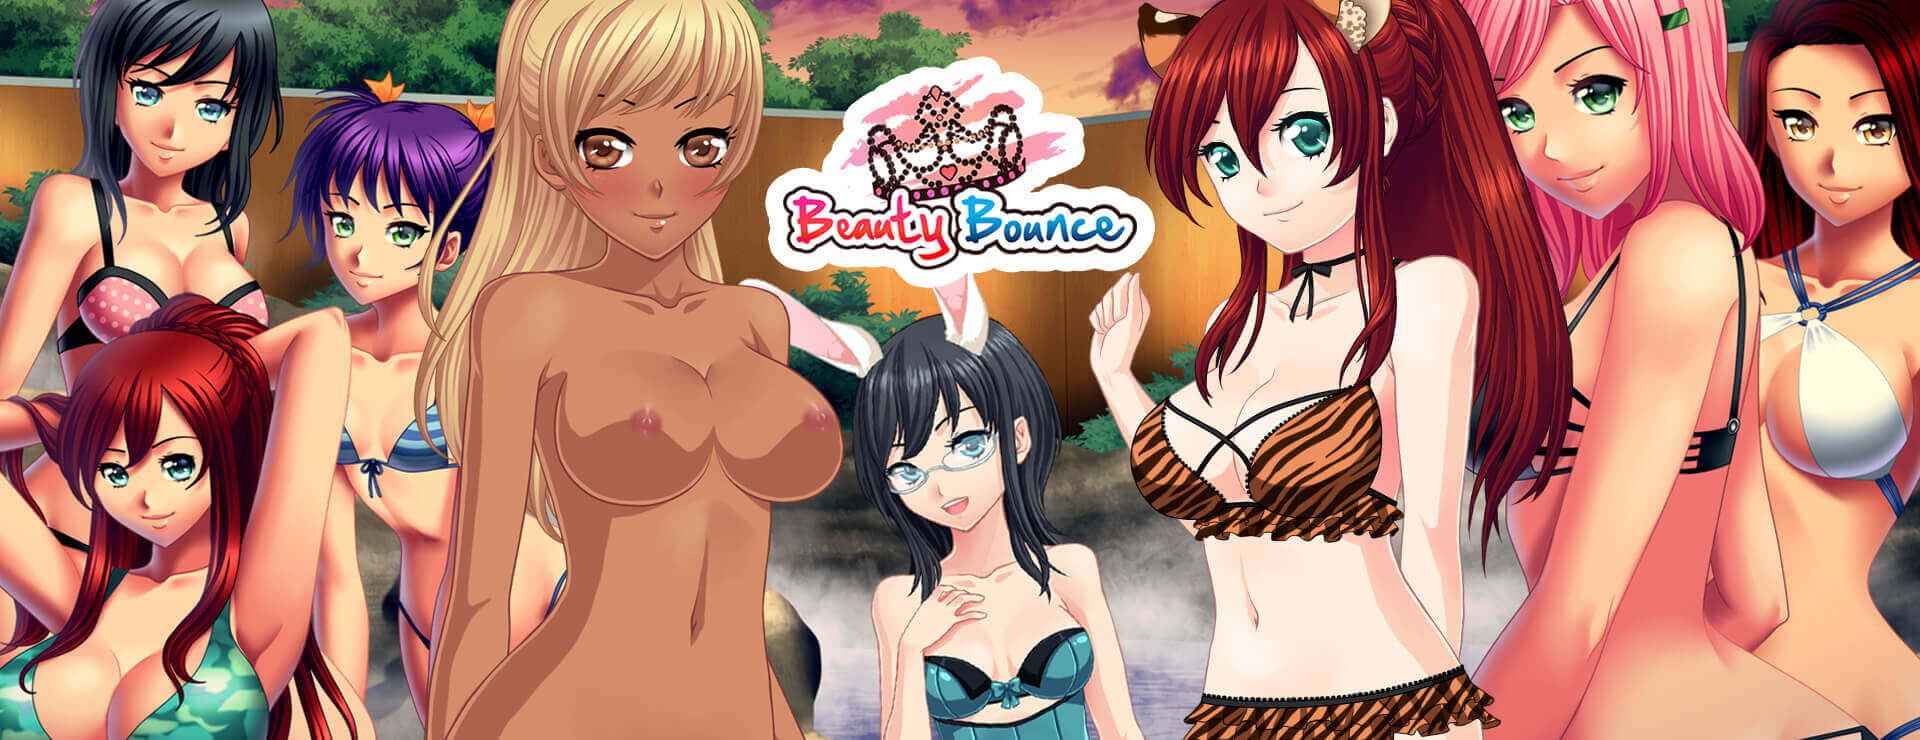 Beauty Bounce - ビジュアルノベル ゲーム